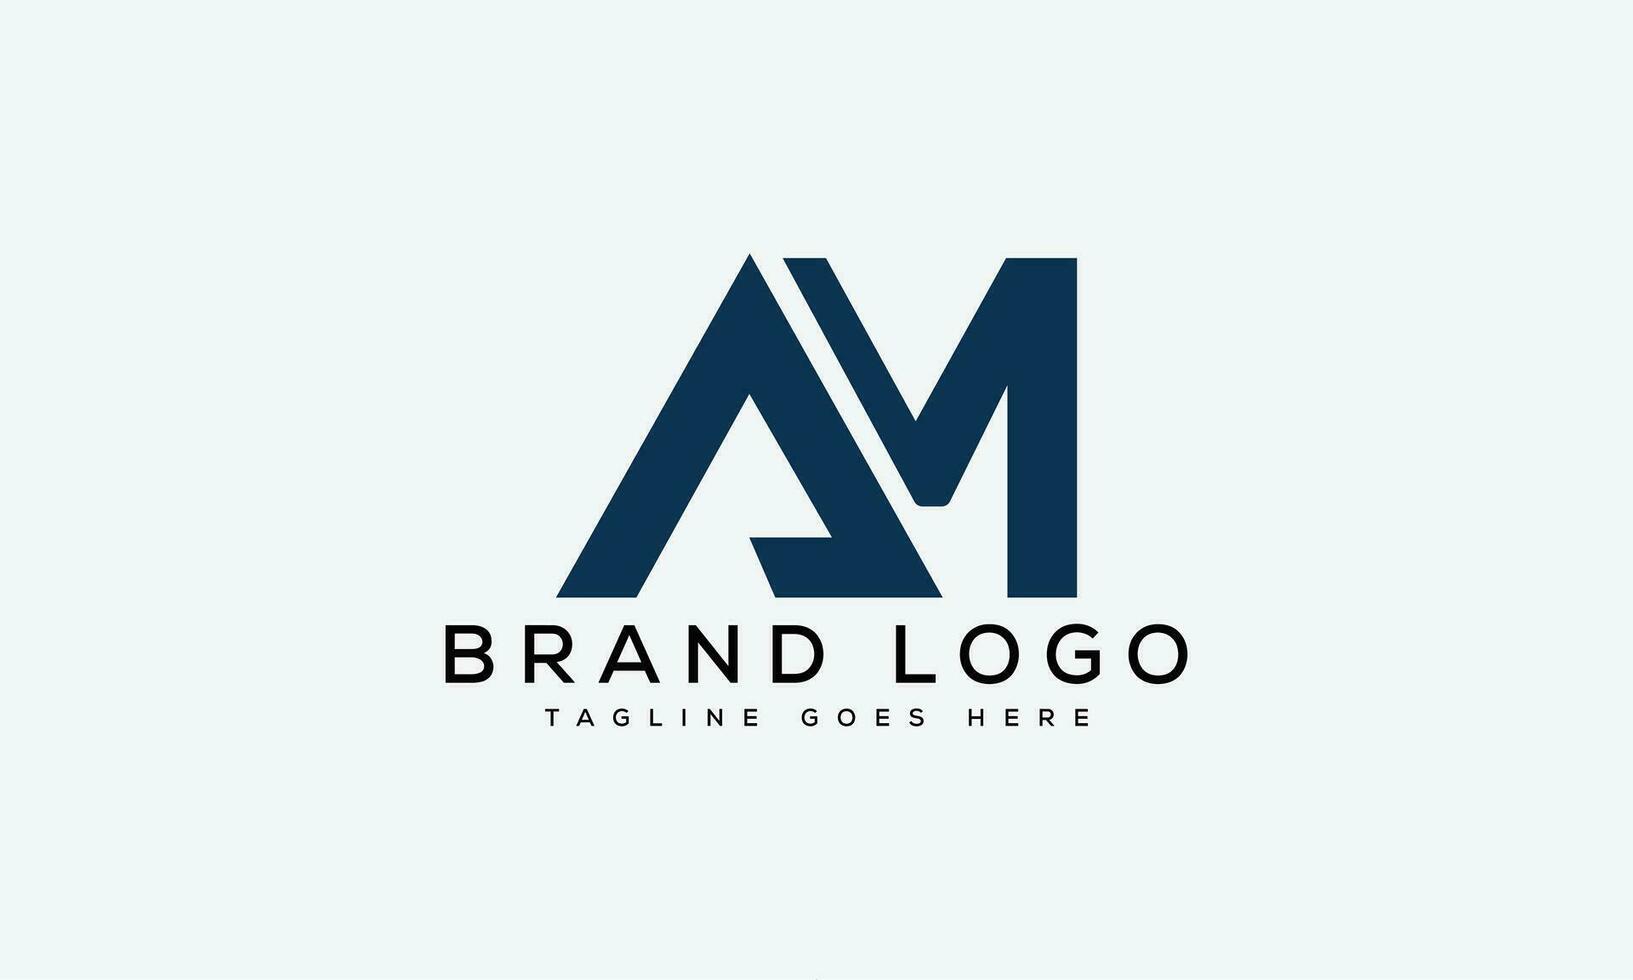 letter AM logo design vector template design for brand.